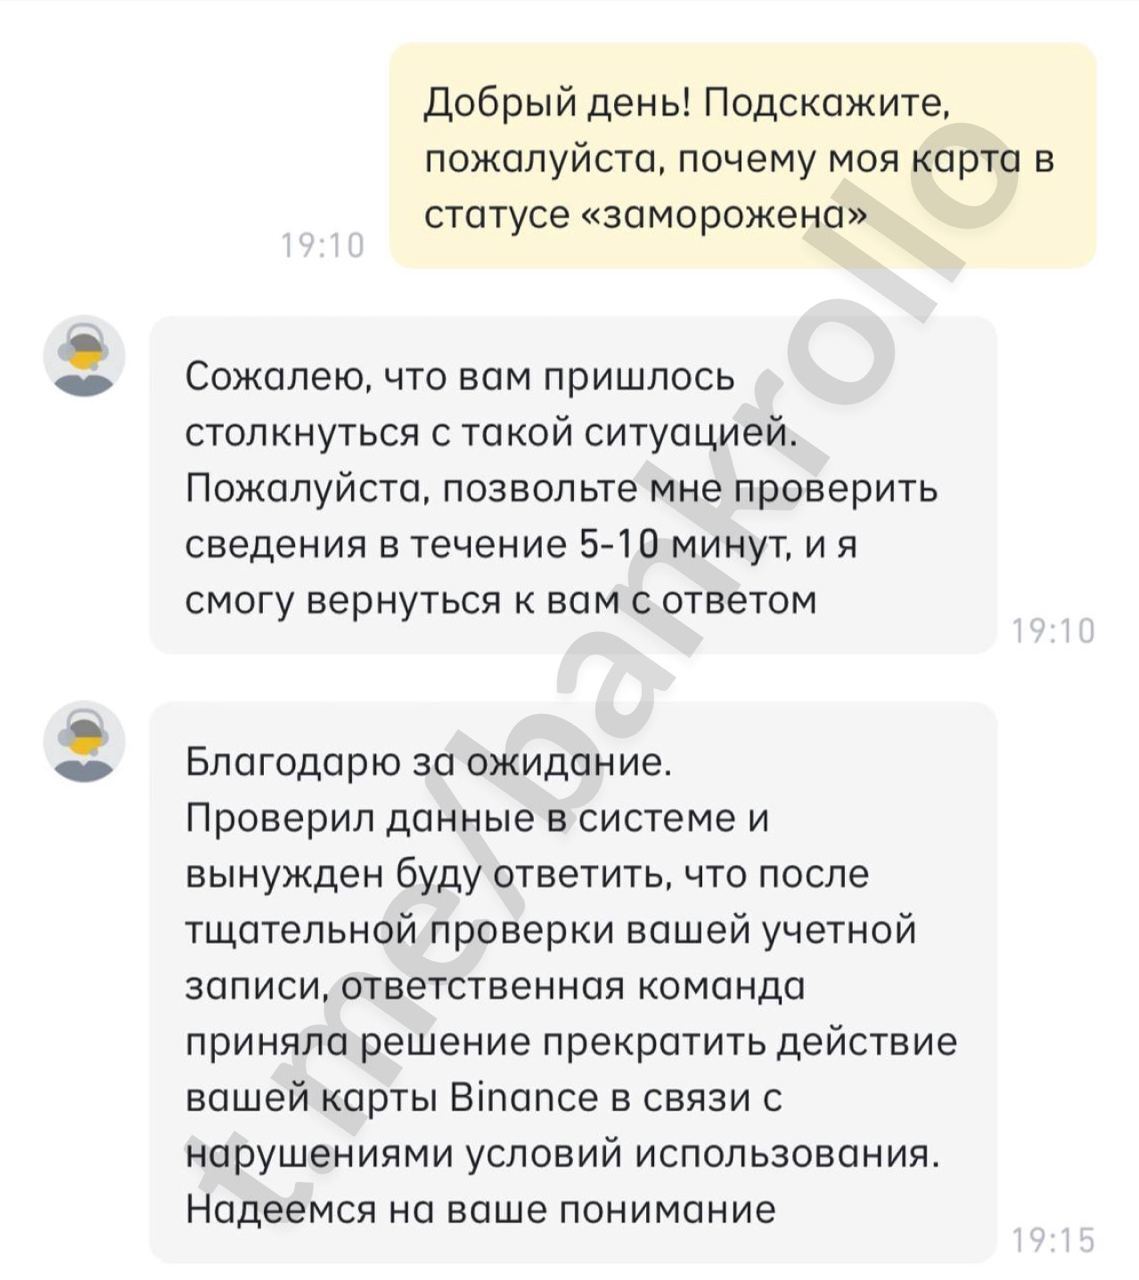 Россияне заявляют о заблокированных картах Binance